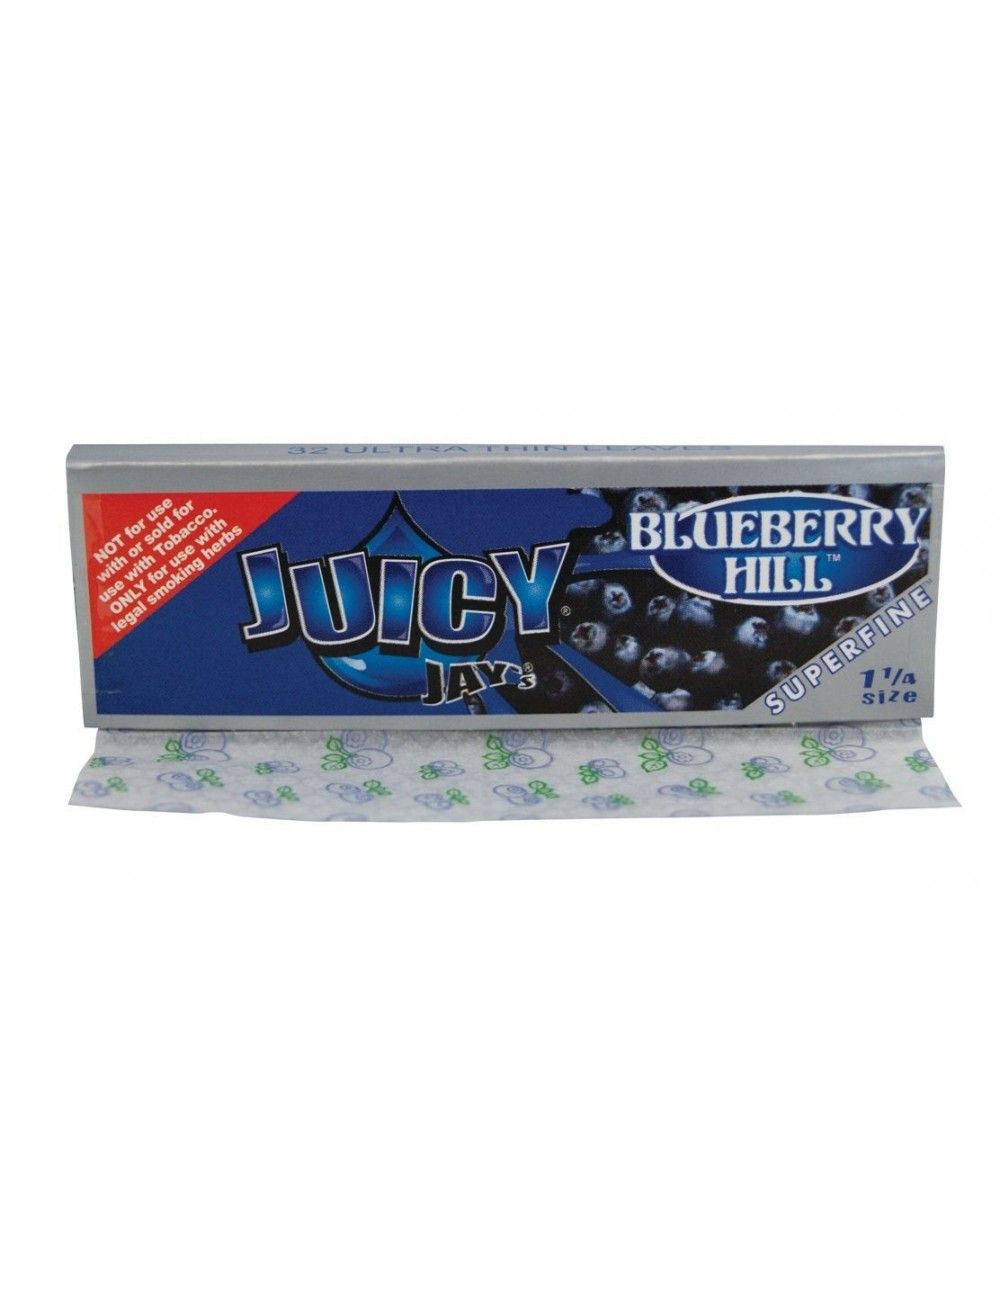 Juicy Jay's Ultra Fine Blueberry Hill